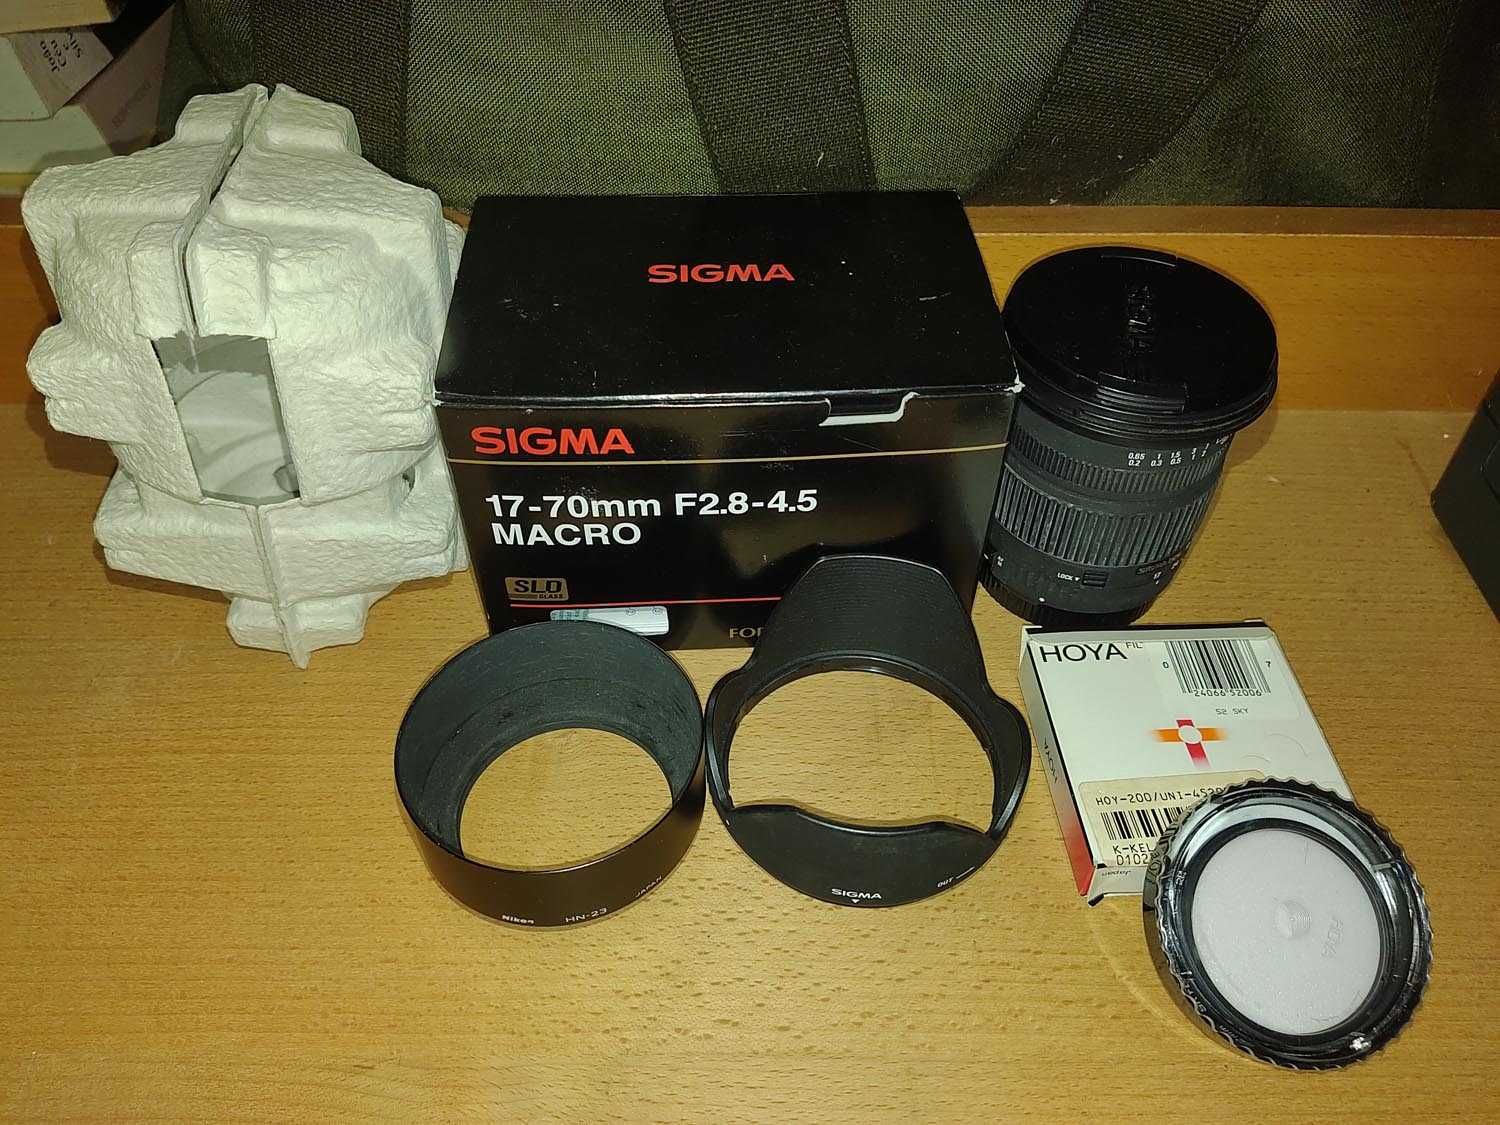 Lente SIGMA 17-70mm F2.8-4.5 DC MACRO - Canon SLR - Made in Japan